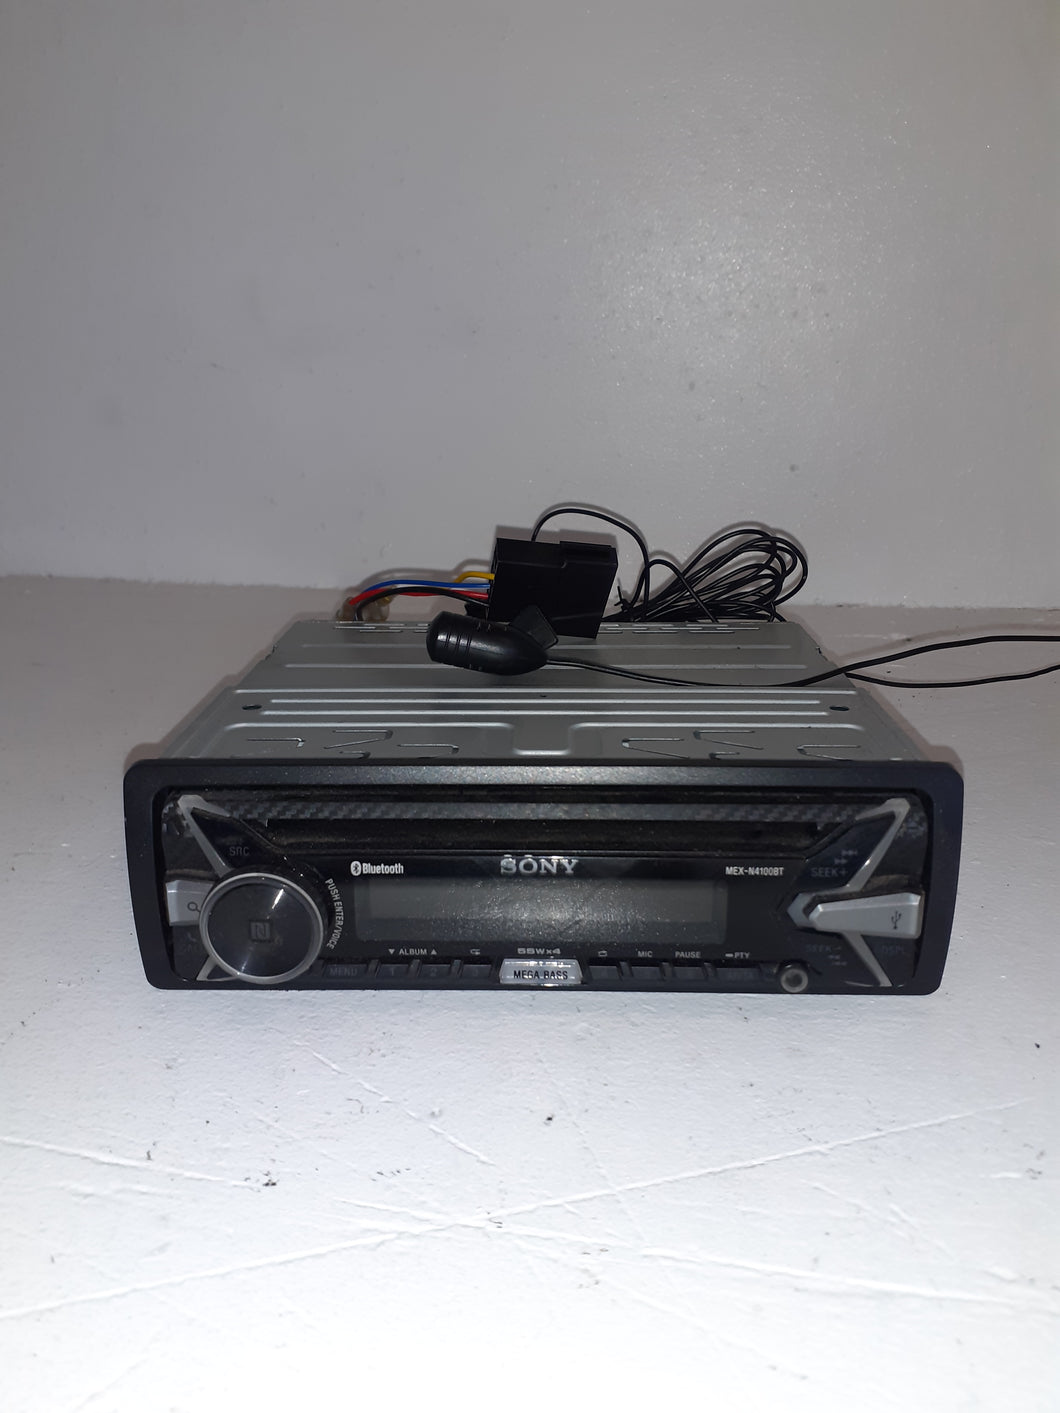 Vauxhall Vivaro Renualt Trafic 2.0 DCi 115 Bluetooth Sony Audio System